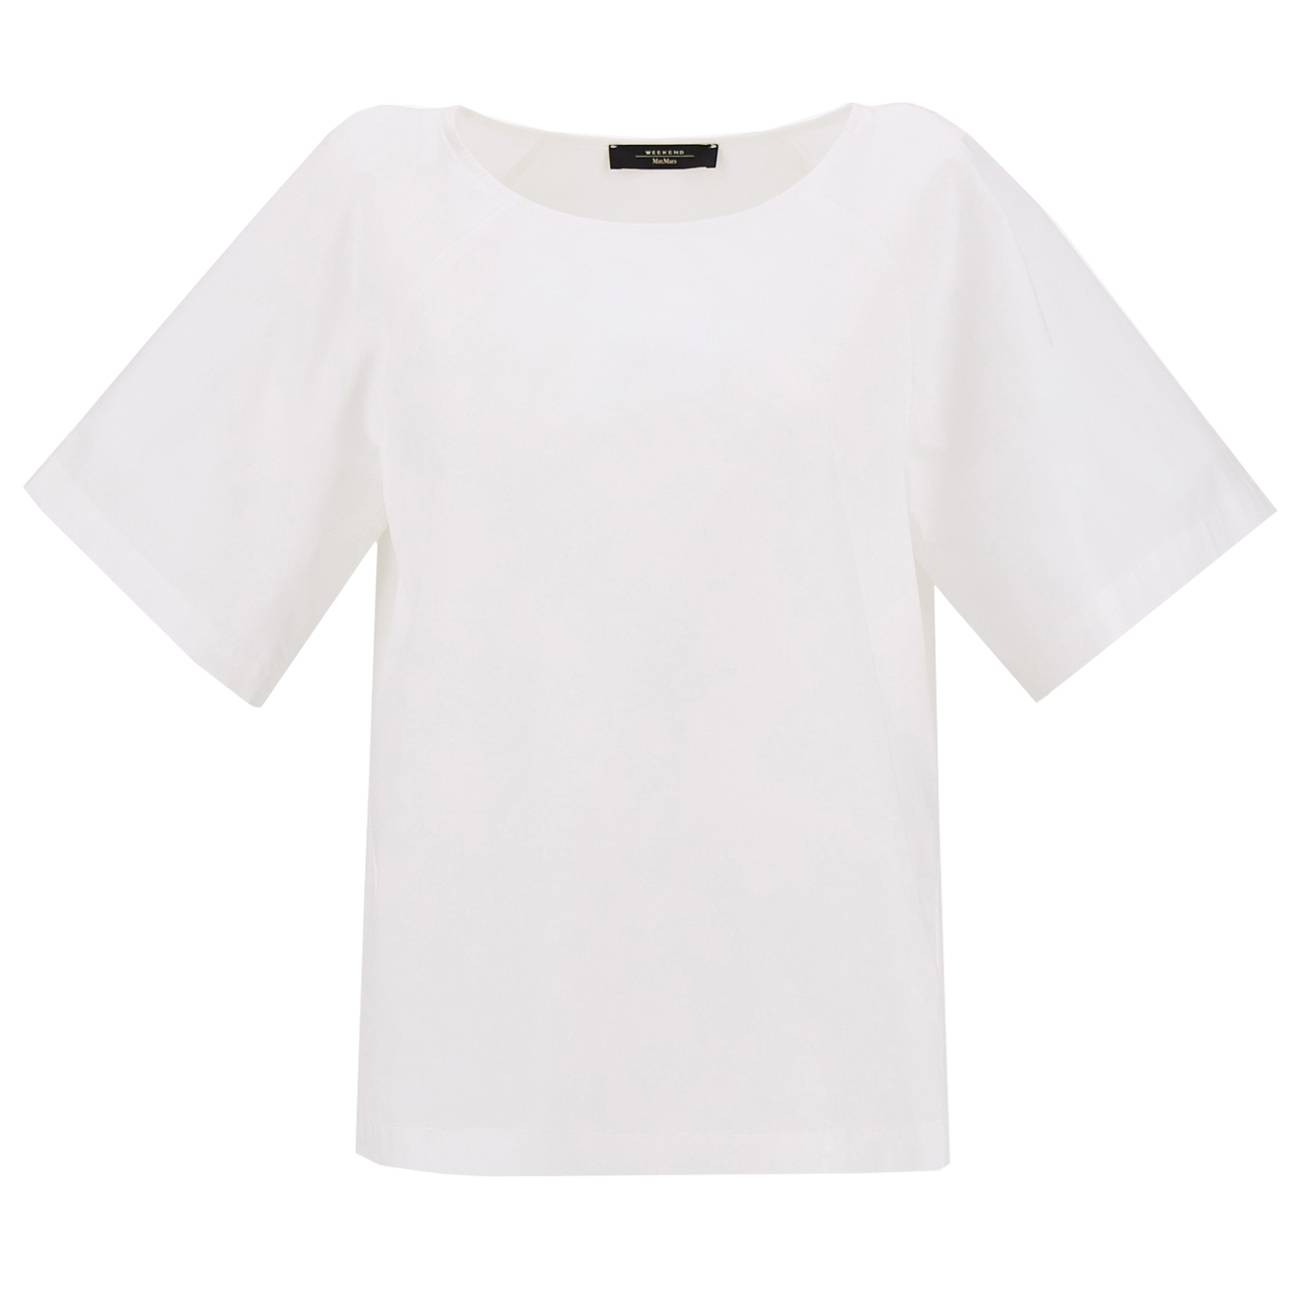 Cotton and jersey blouse XS bestvalue.eu